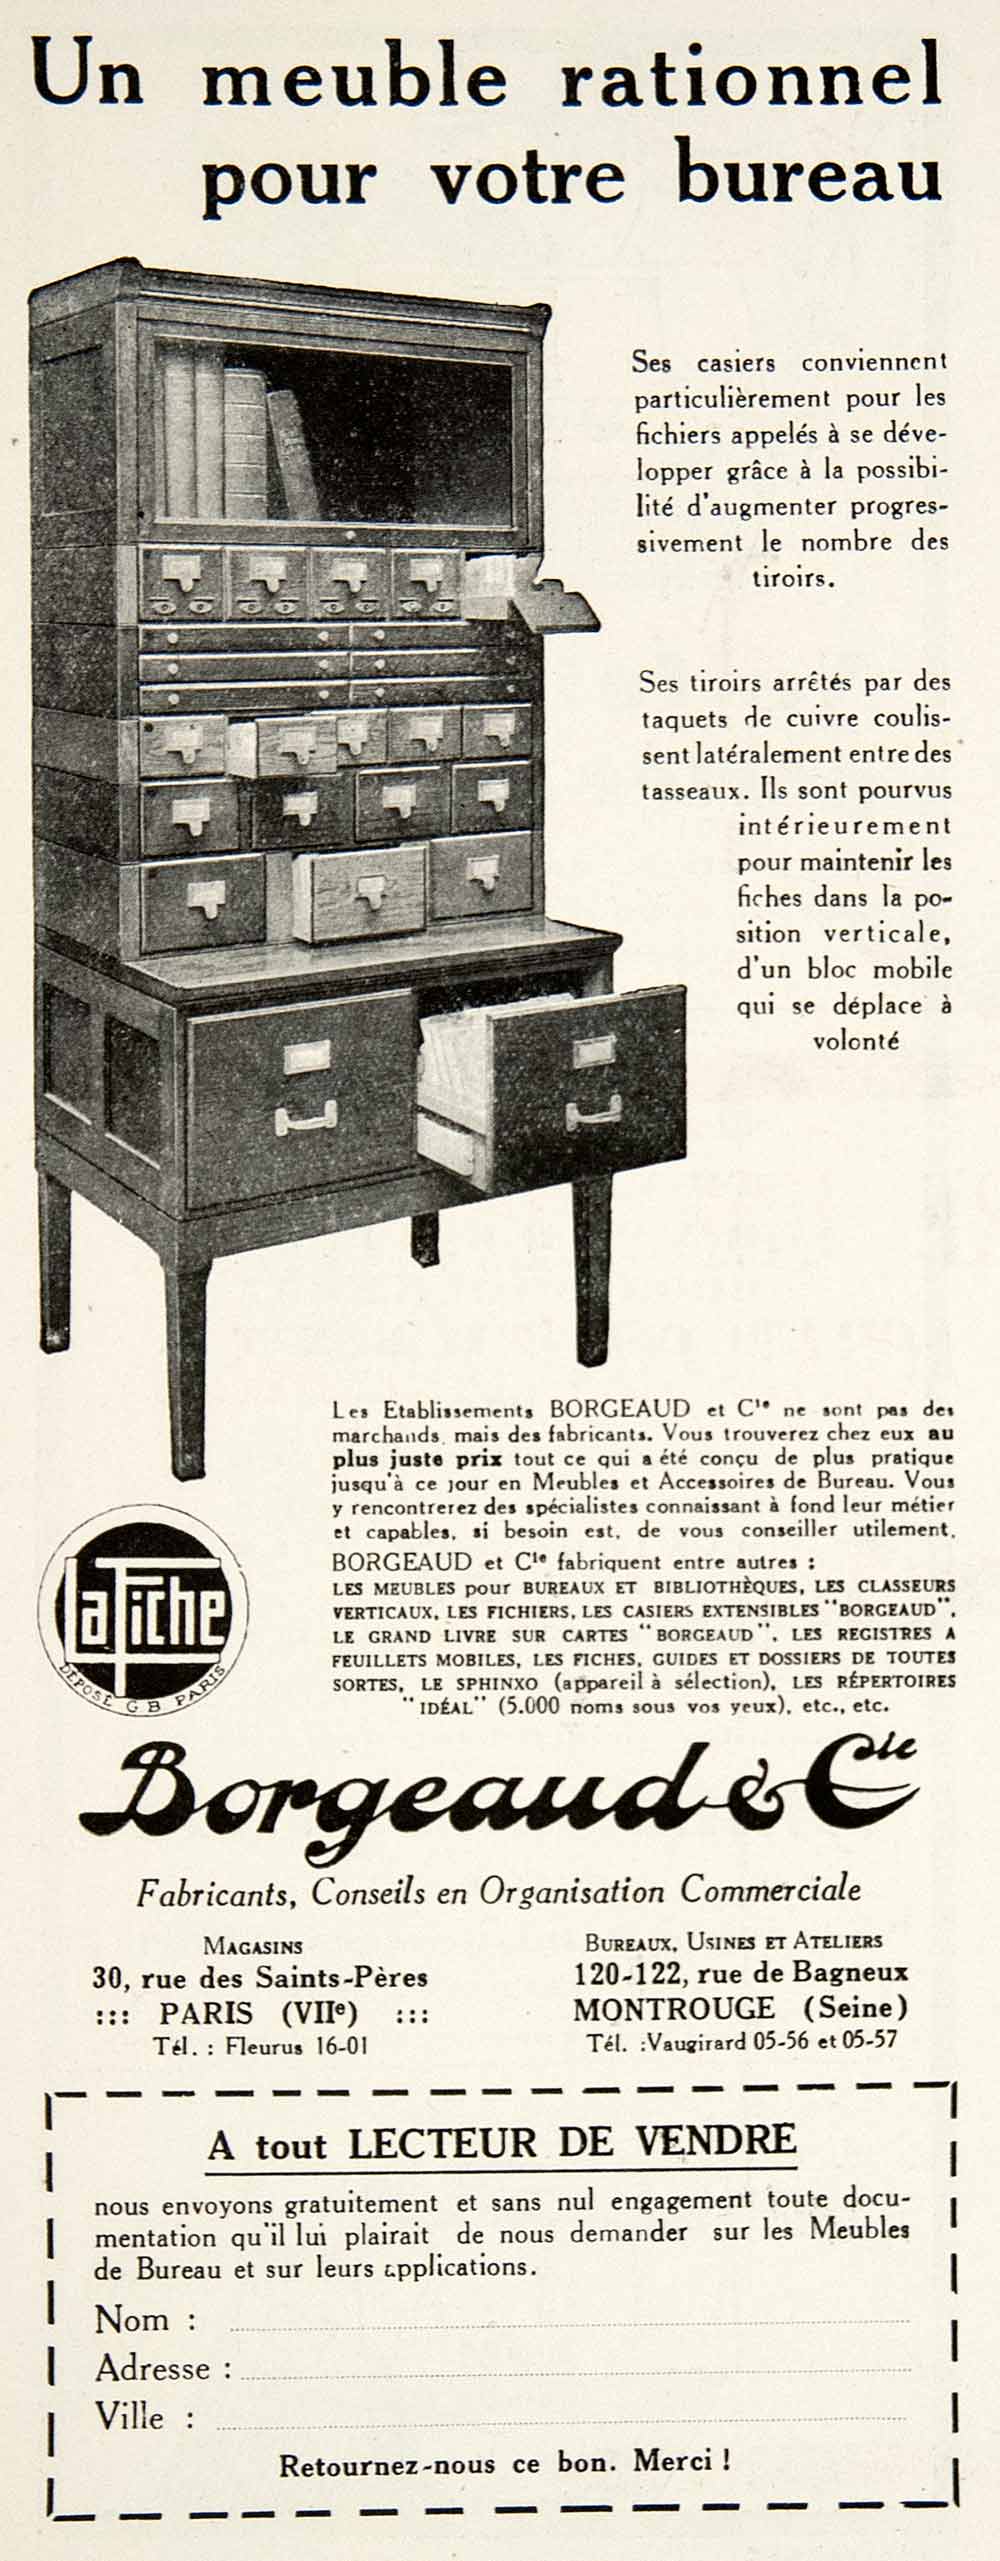 1928 Ad Vintage French Borgeaud & Cie Office Furniture File Cabinet Paris VEN5